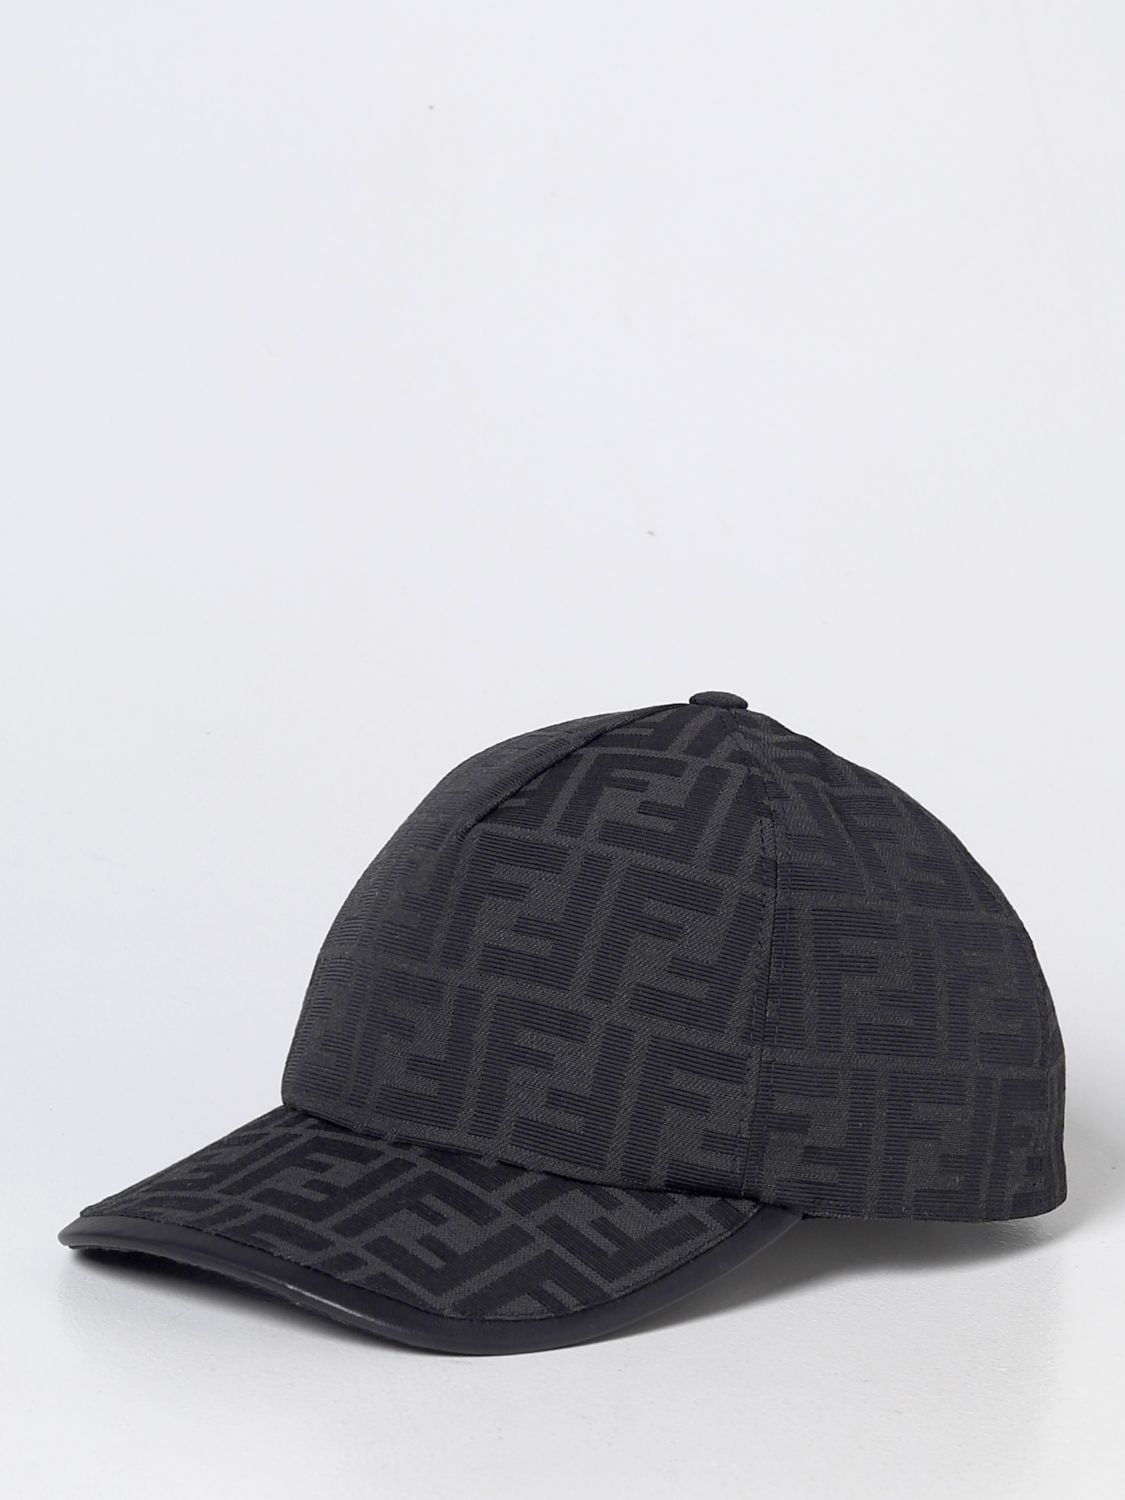 Fendi Men's Hat